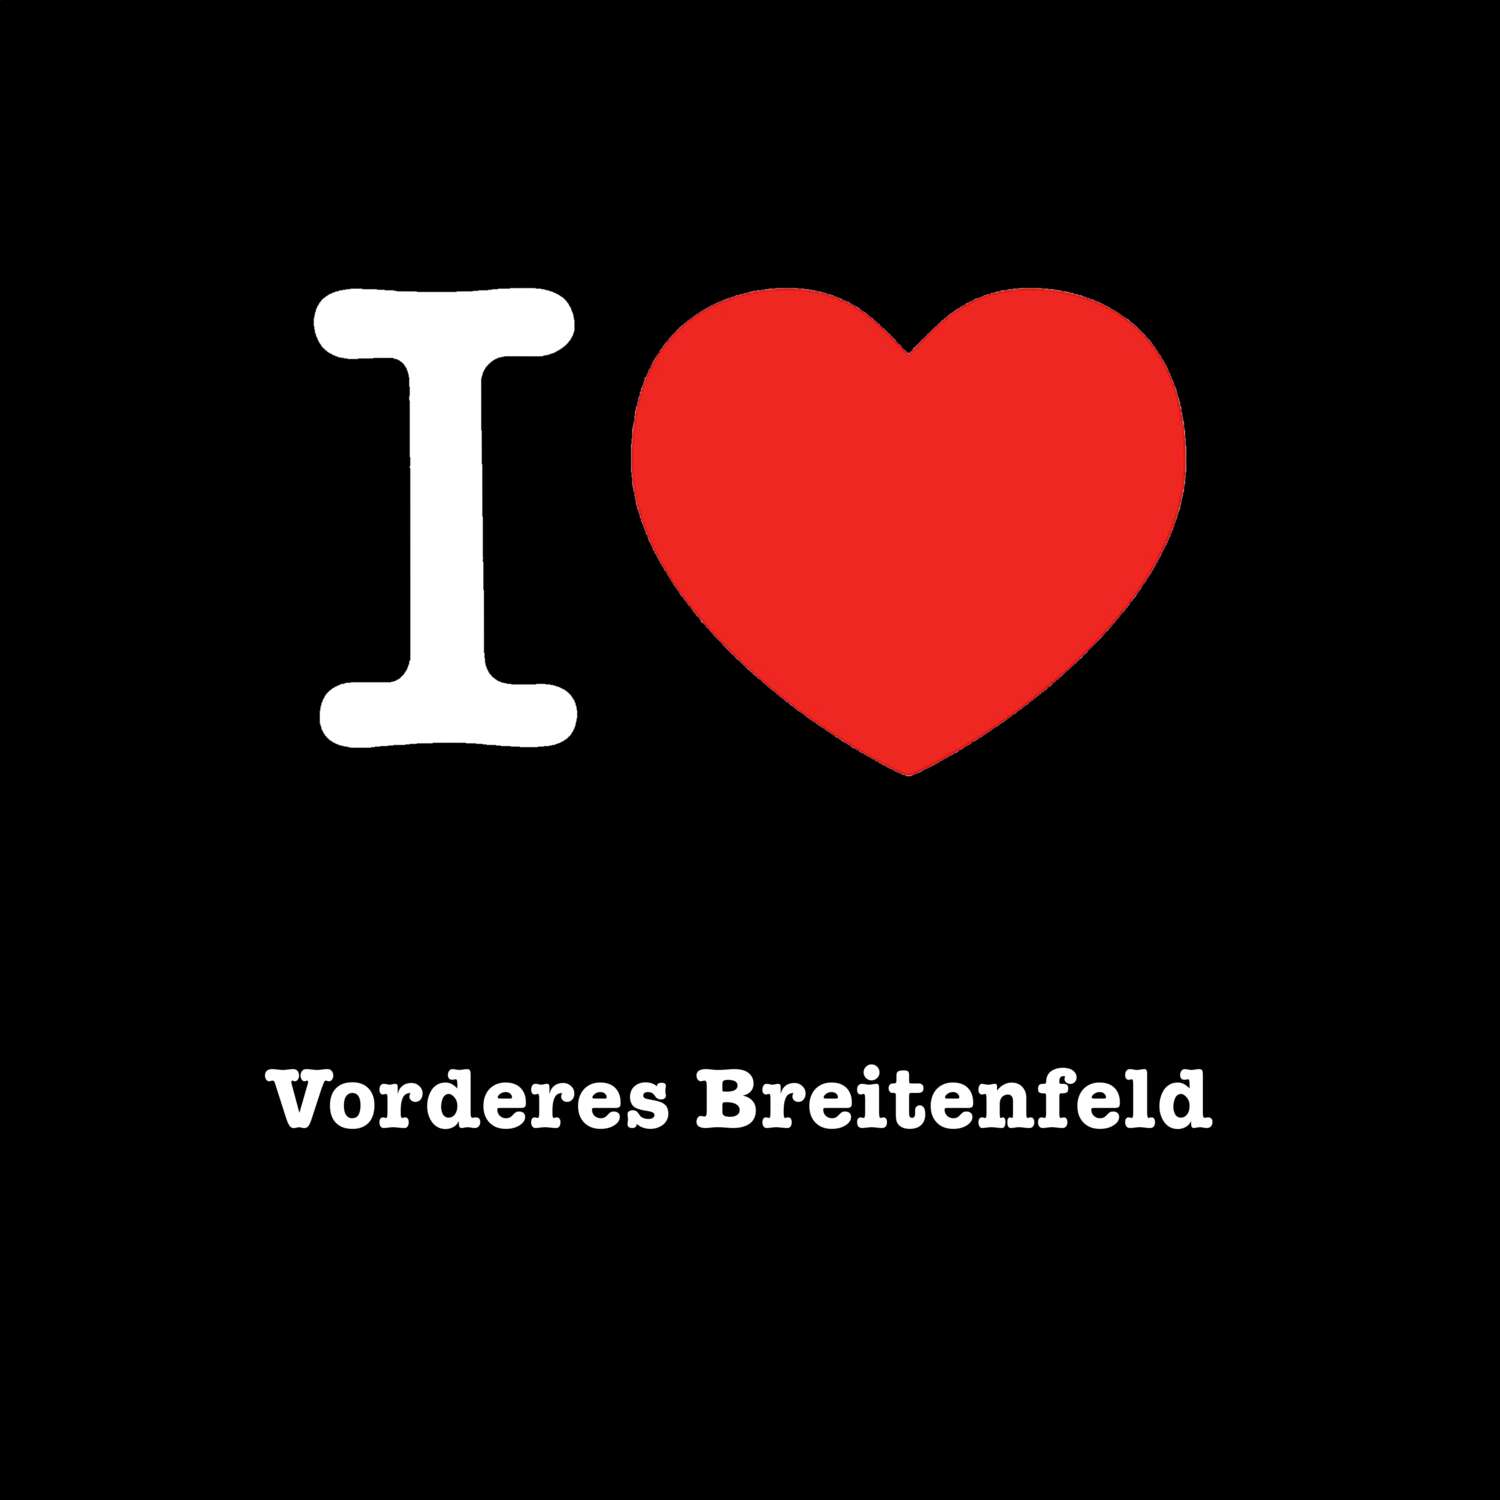 Vorderes Breitenfeld T-Shirt »I love«